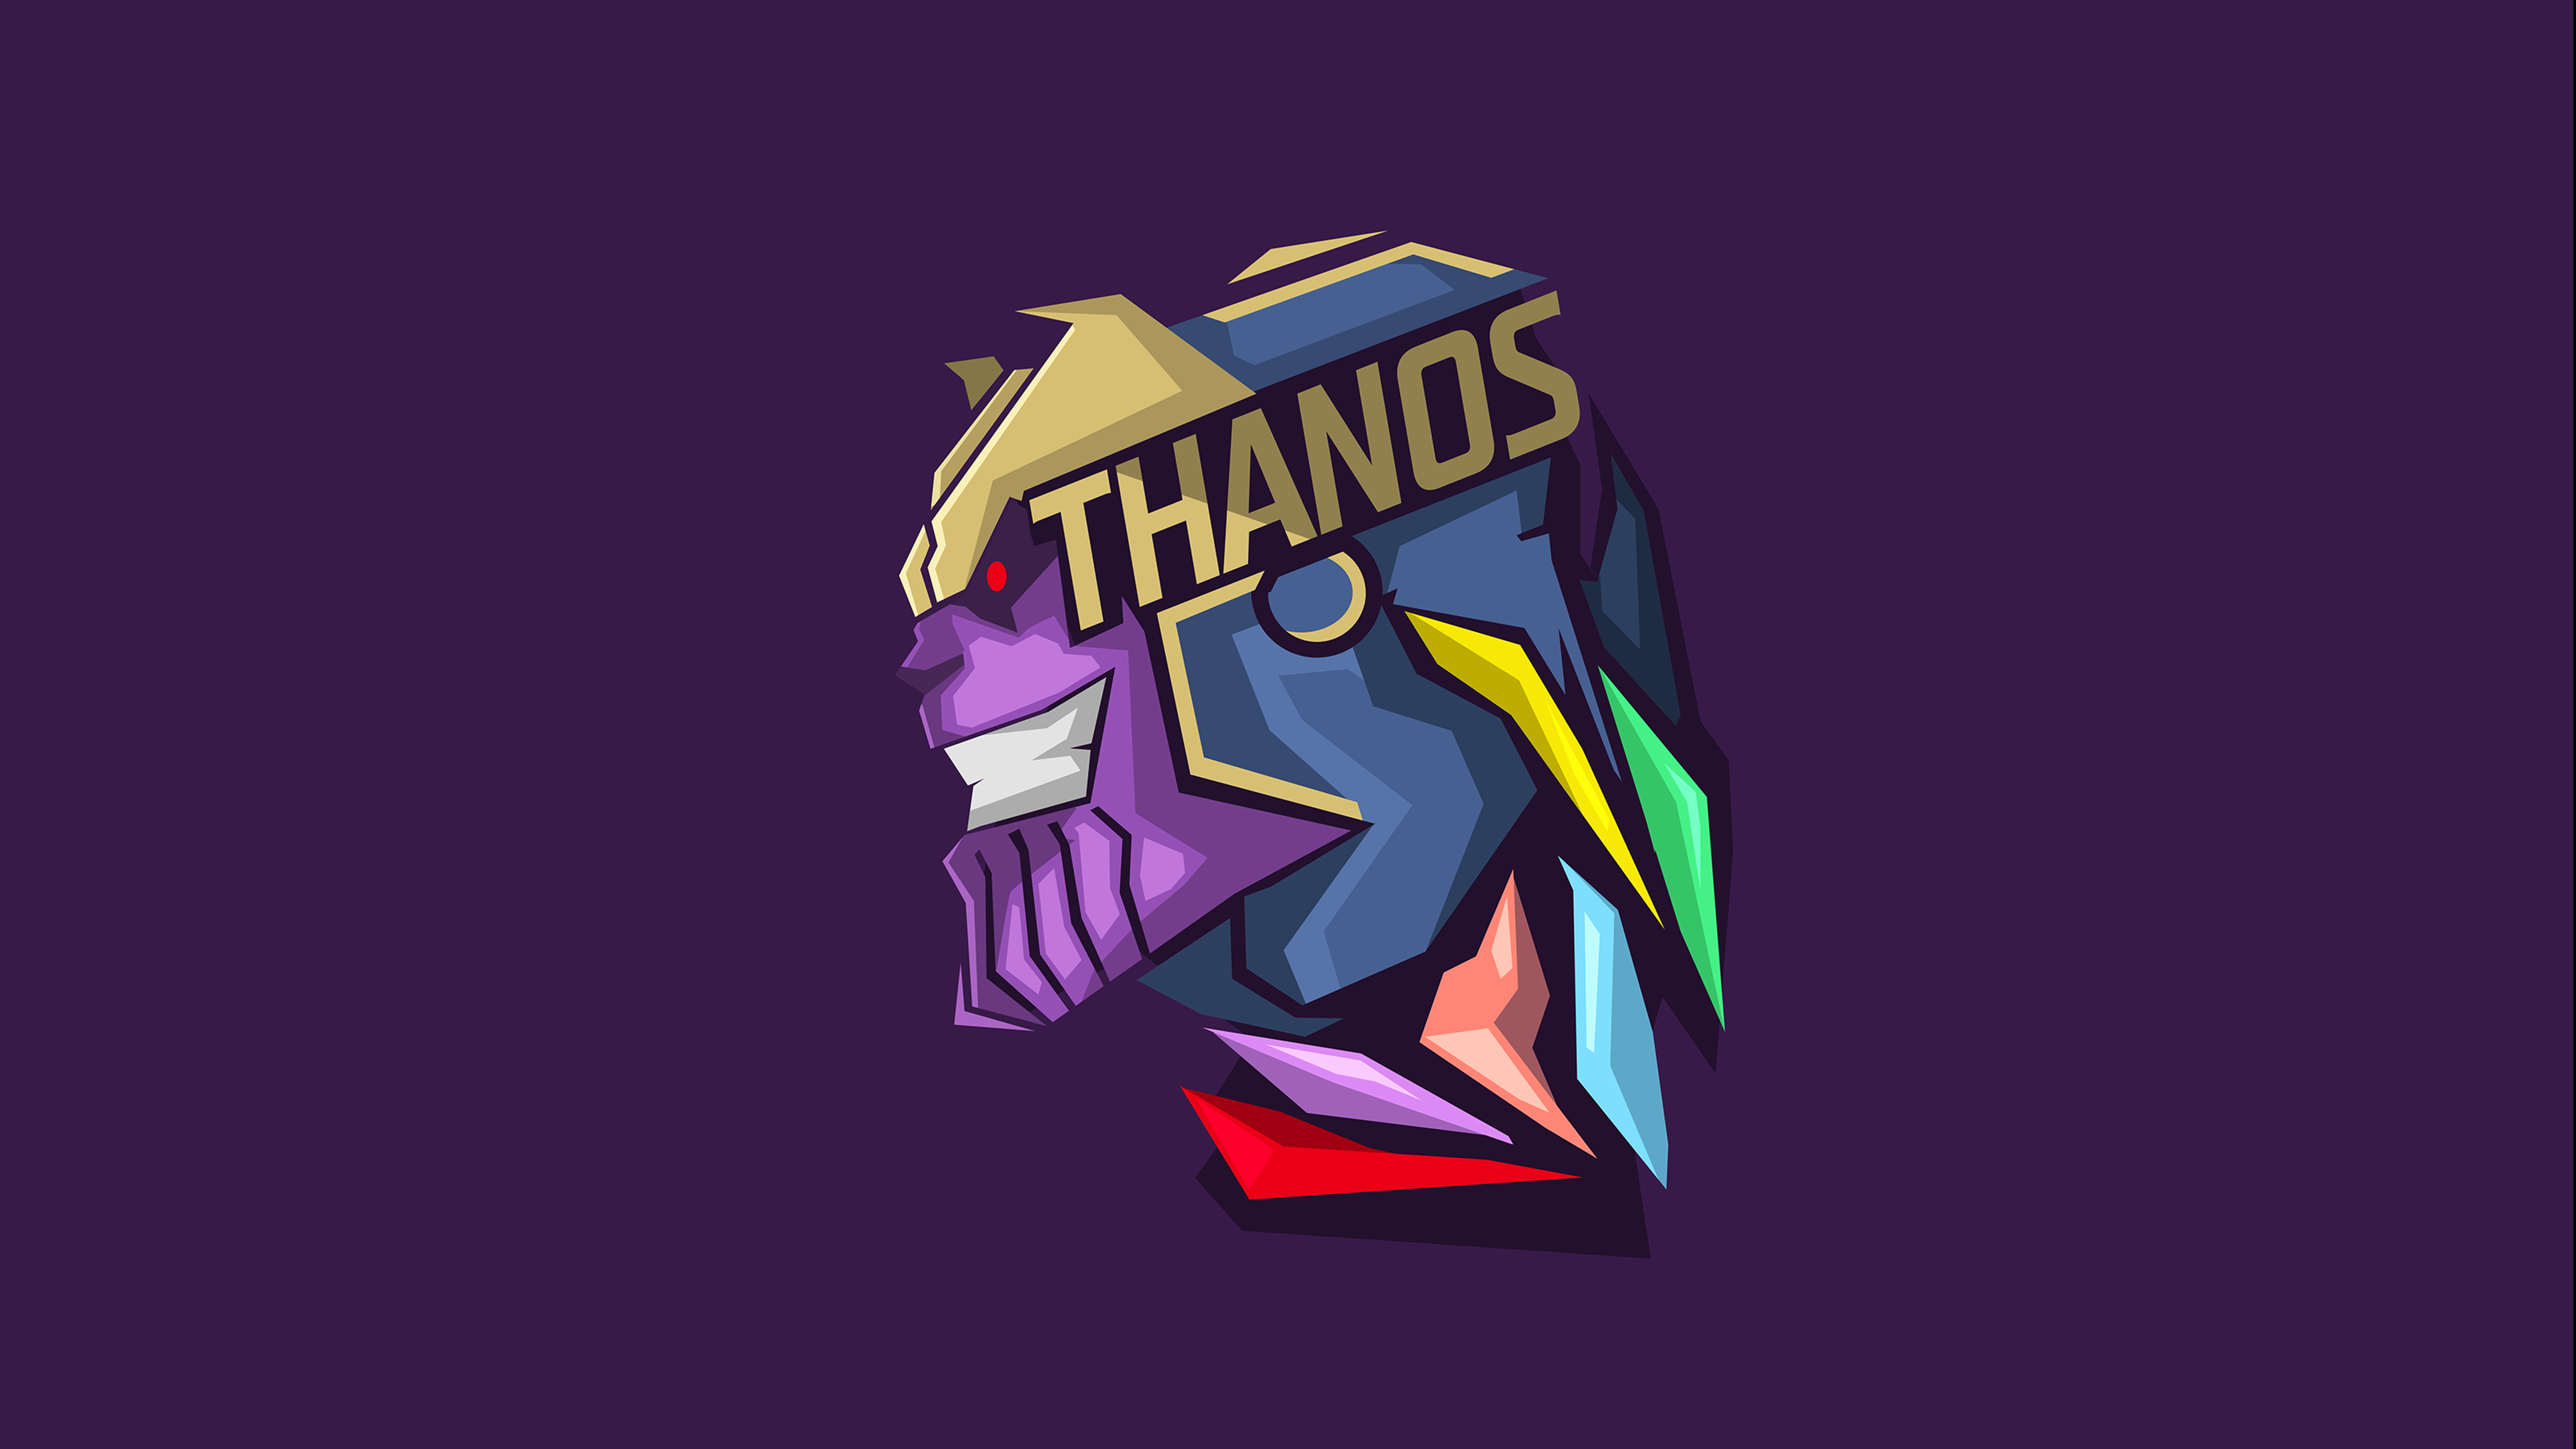 Ics Thanos 8k Ultra HD Wallpaper By Bosslogic